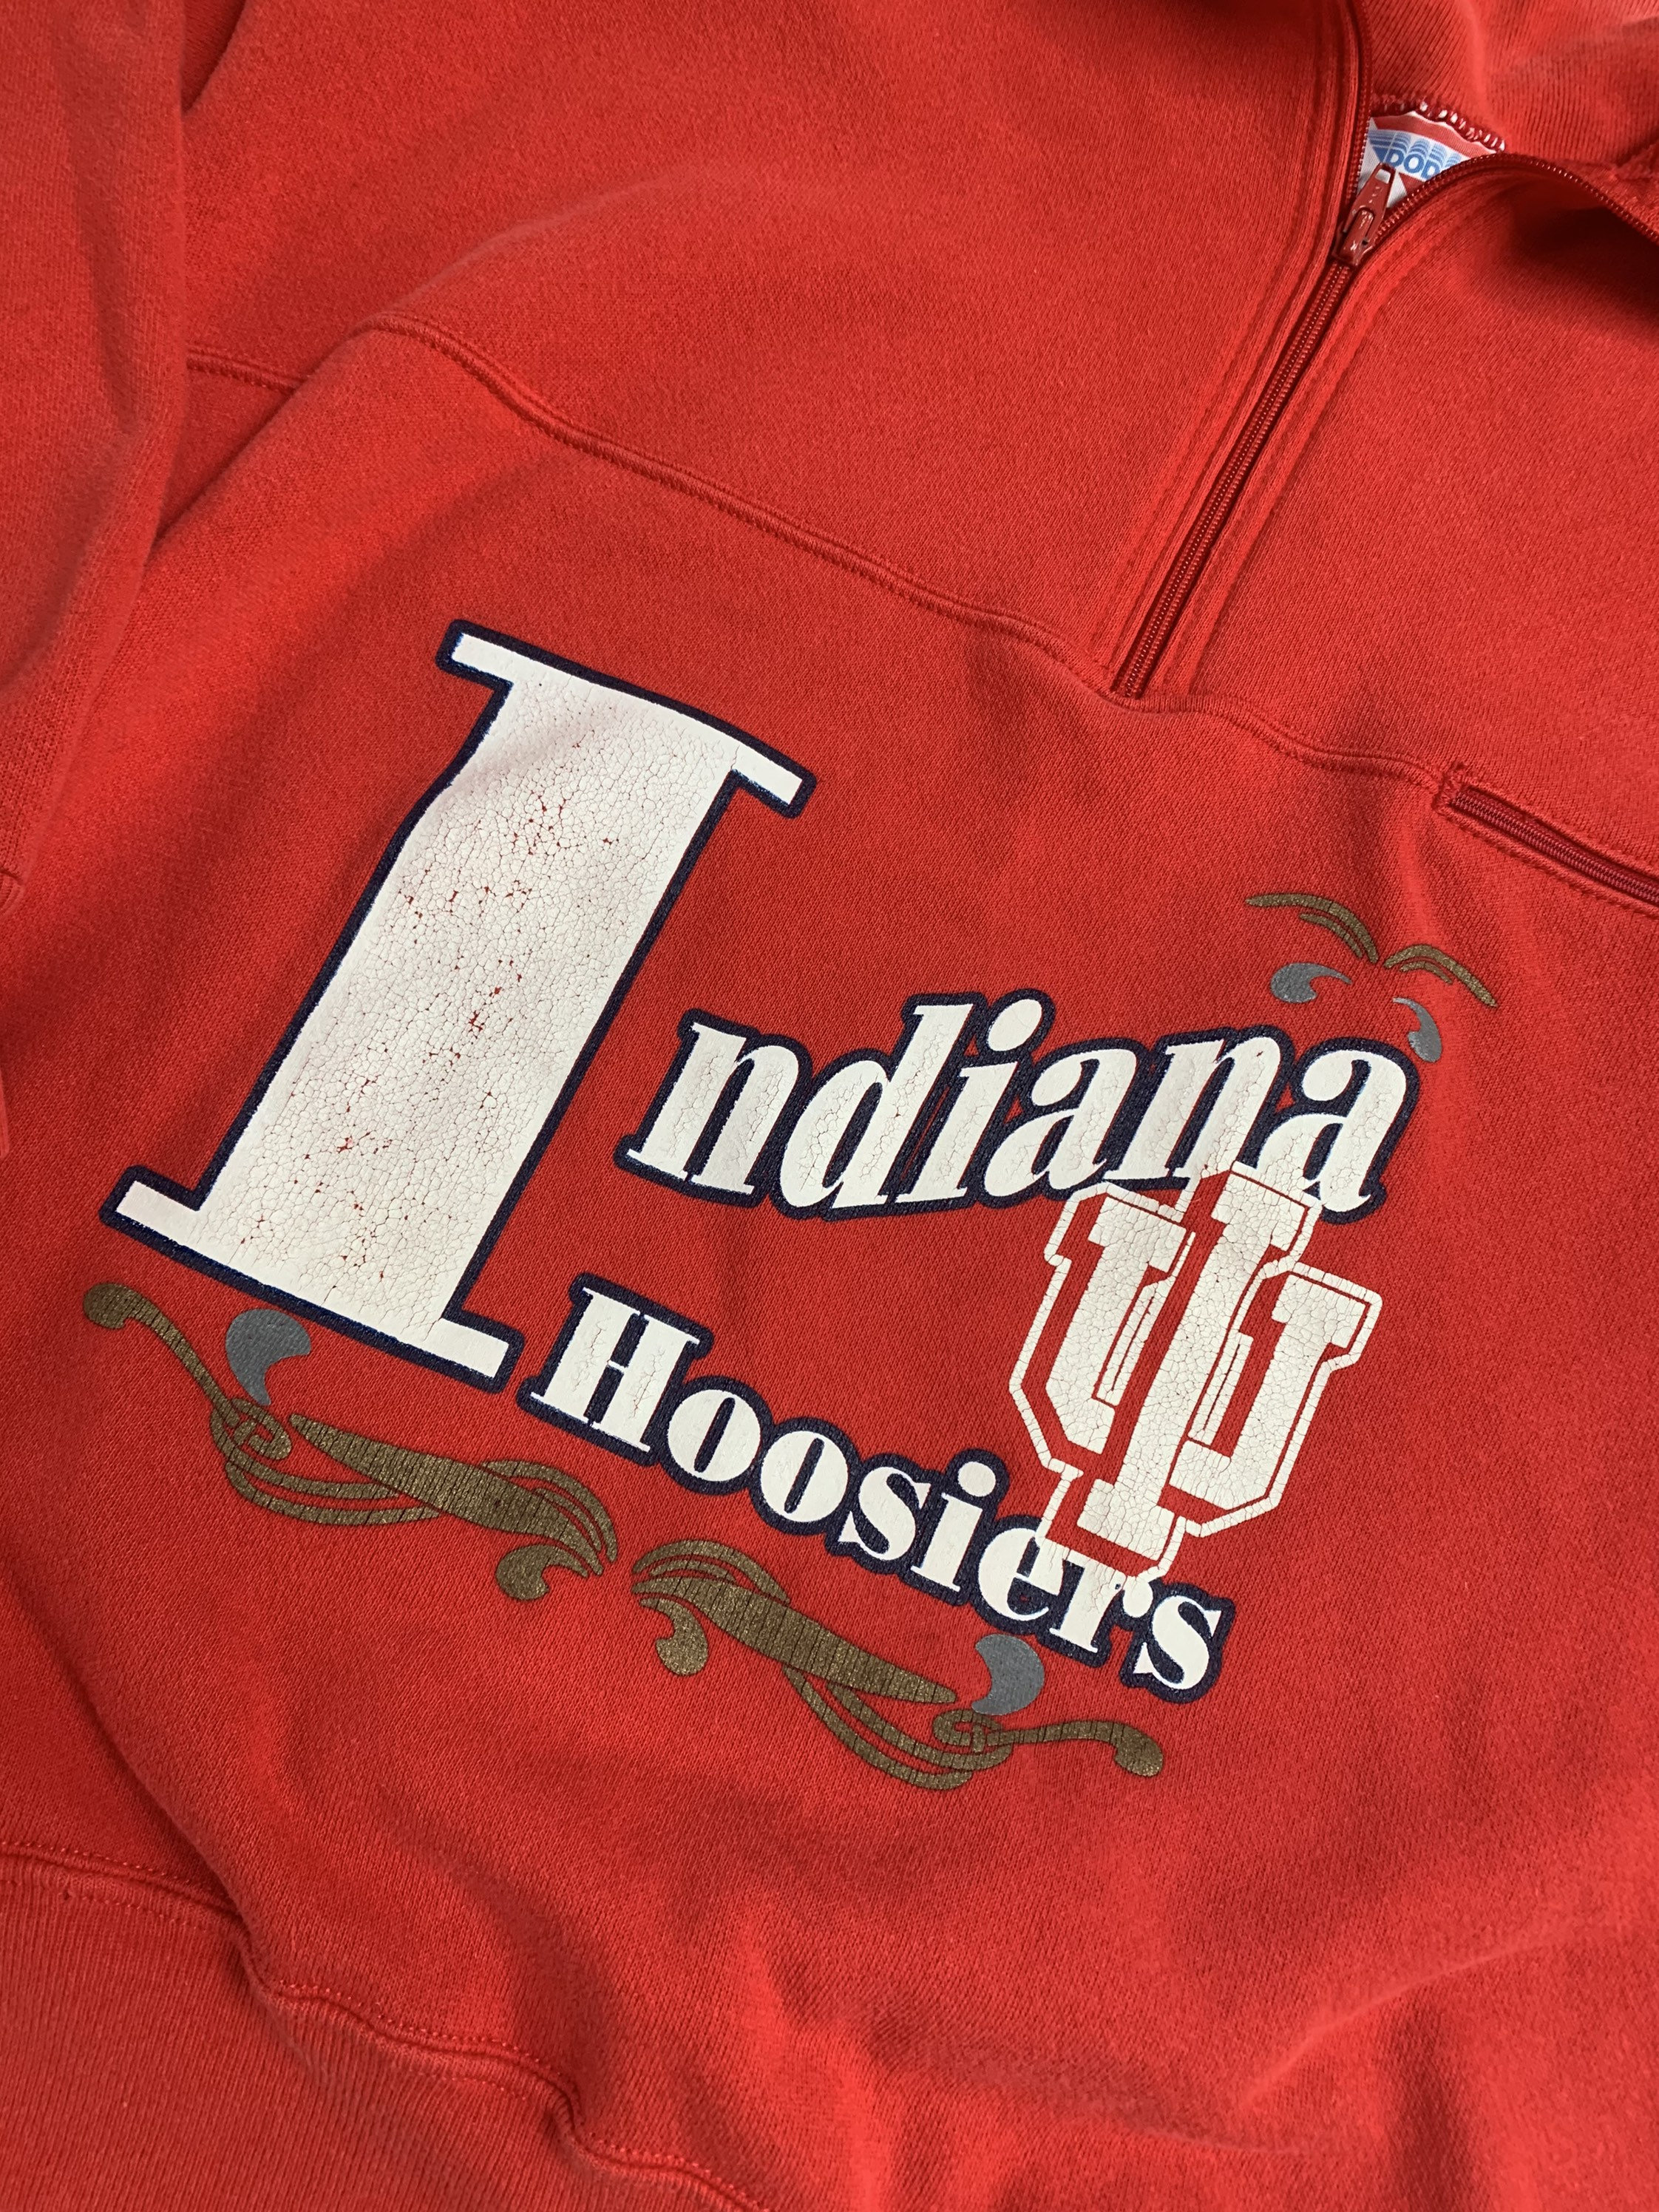 Indiana Hoosiers Customizable Baseball Jersey – Best Sports Jerseys